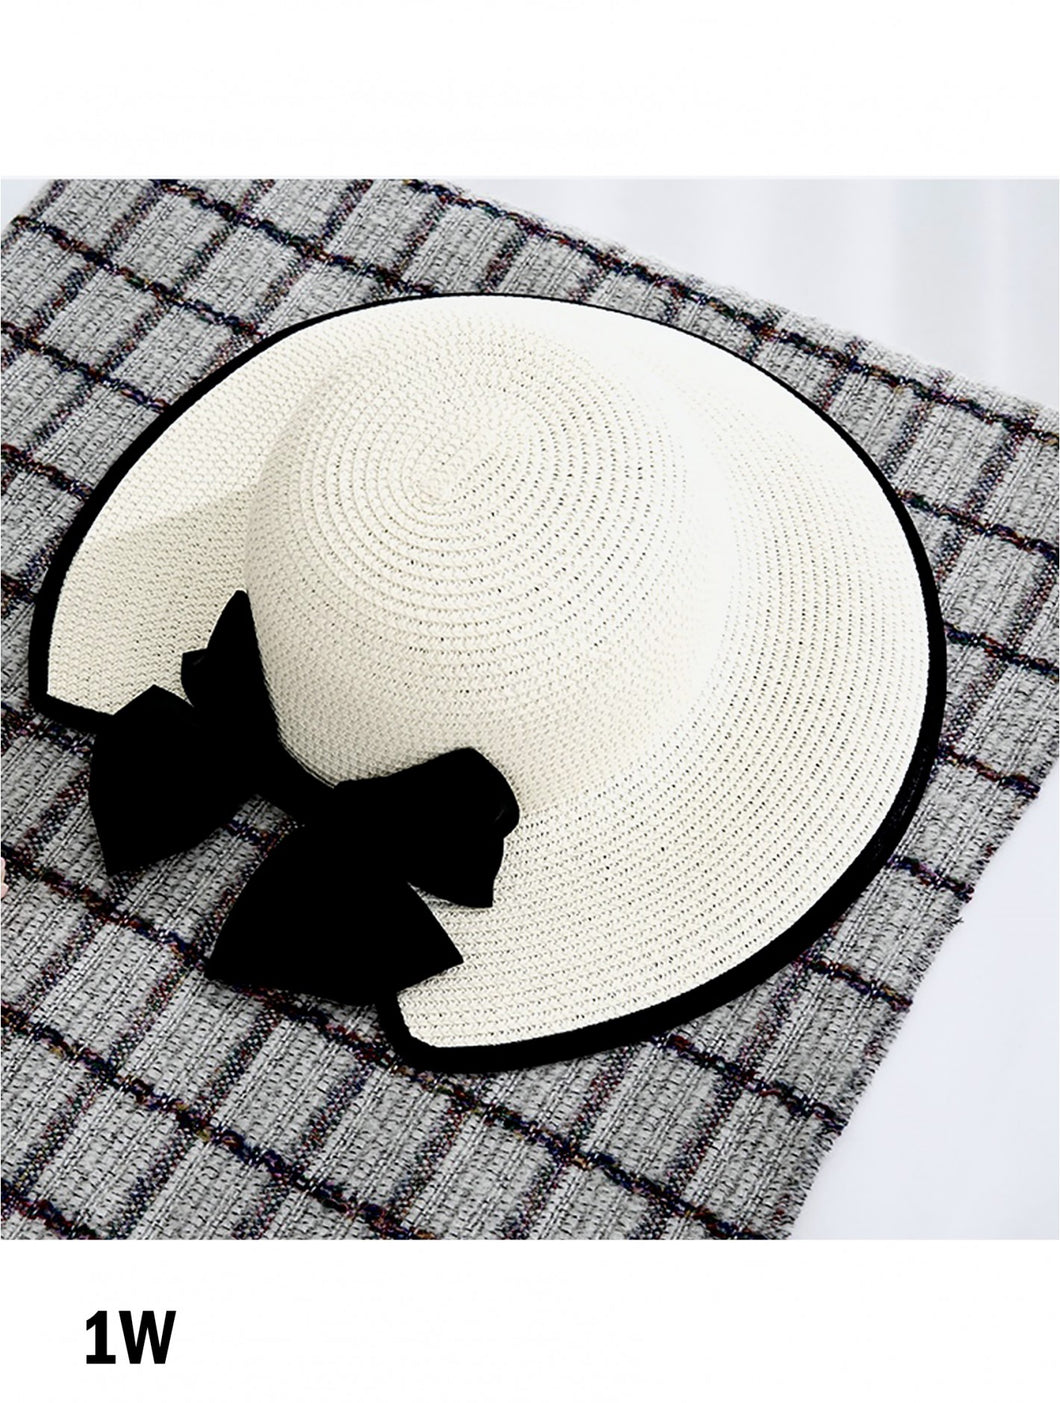 Hats - Wide Brim Straw Sun/Beach Hat with Bow - White/Black